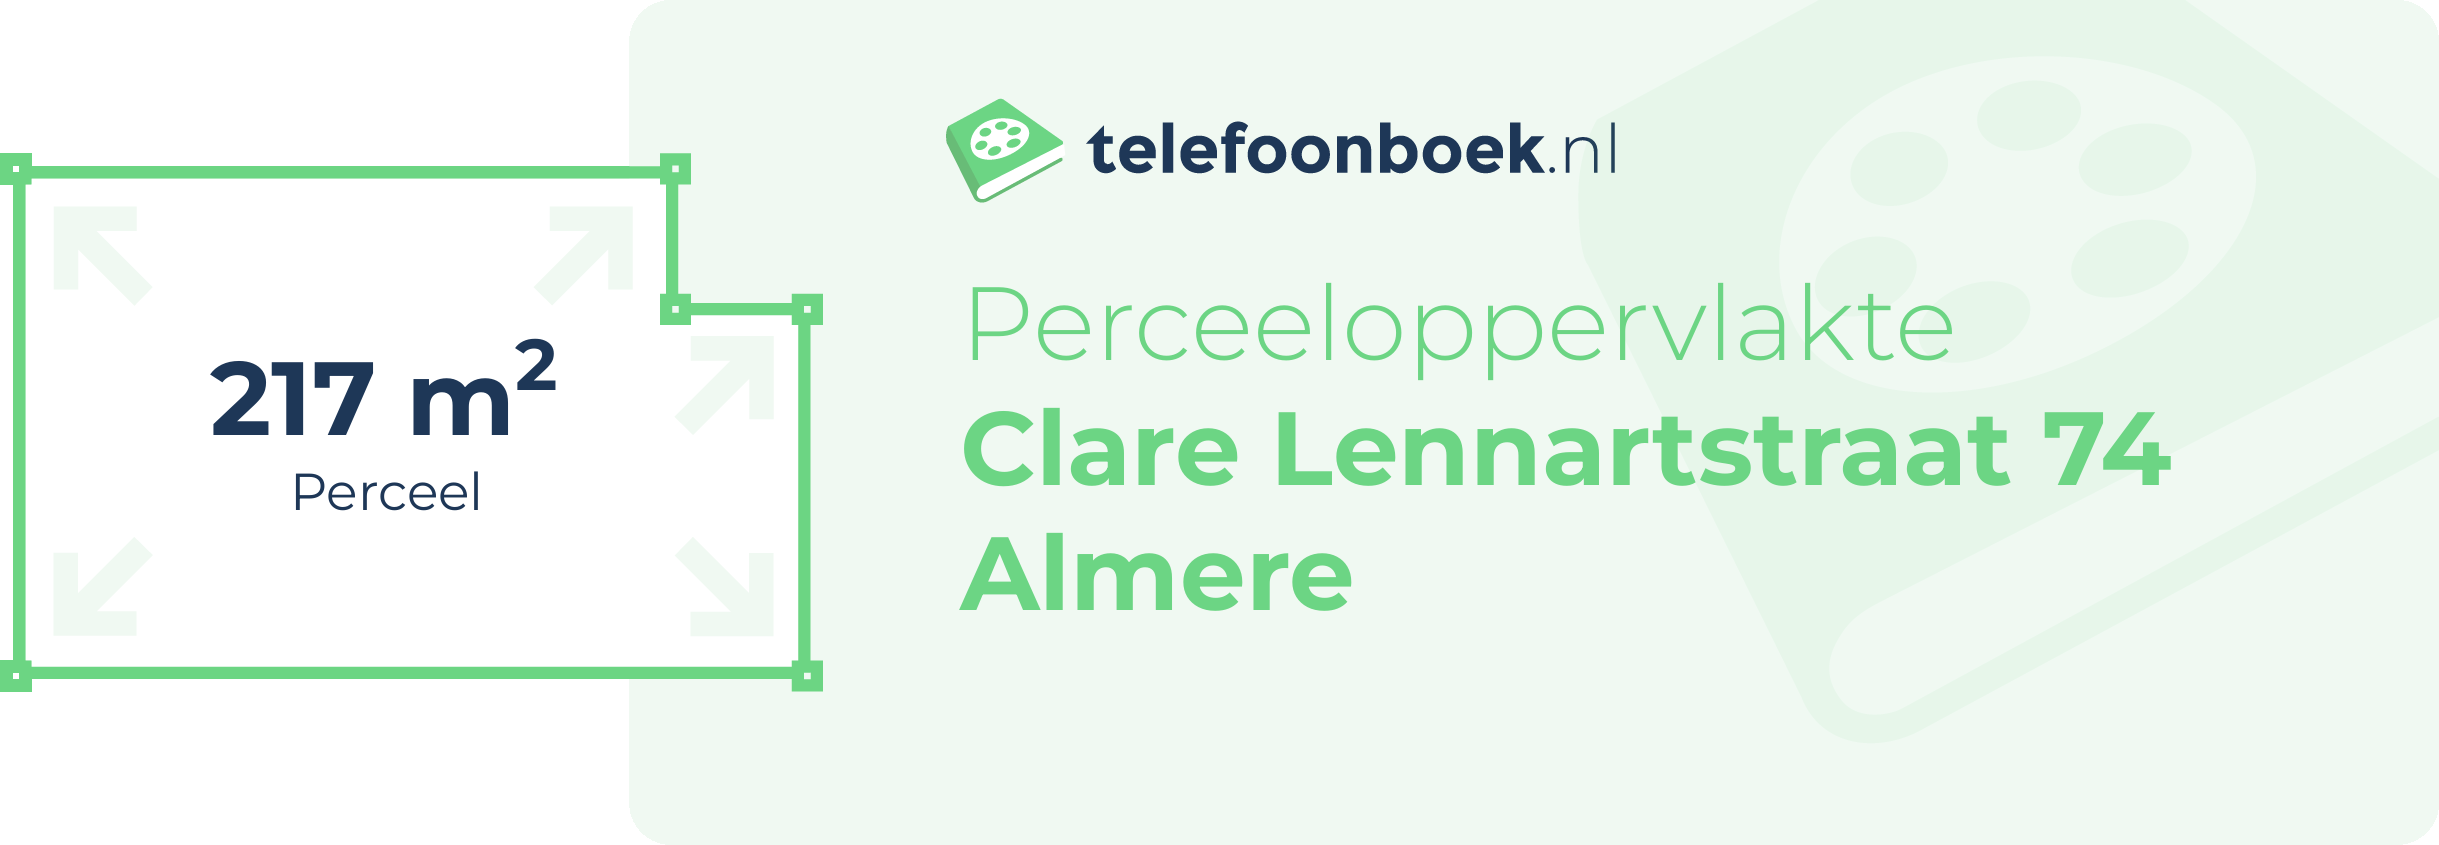 Perceeloppervlakte Clare Lennartstraat 74 Almere